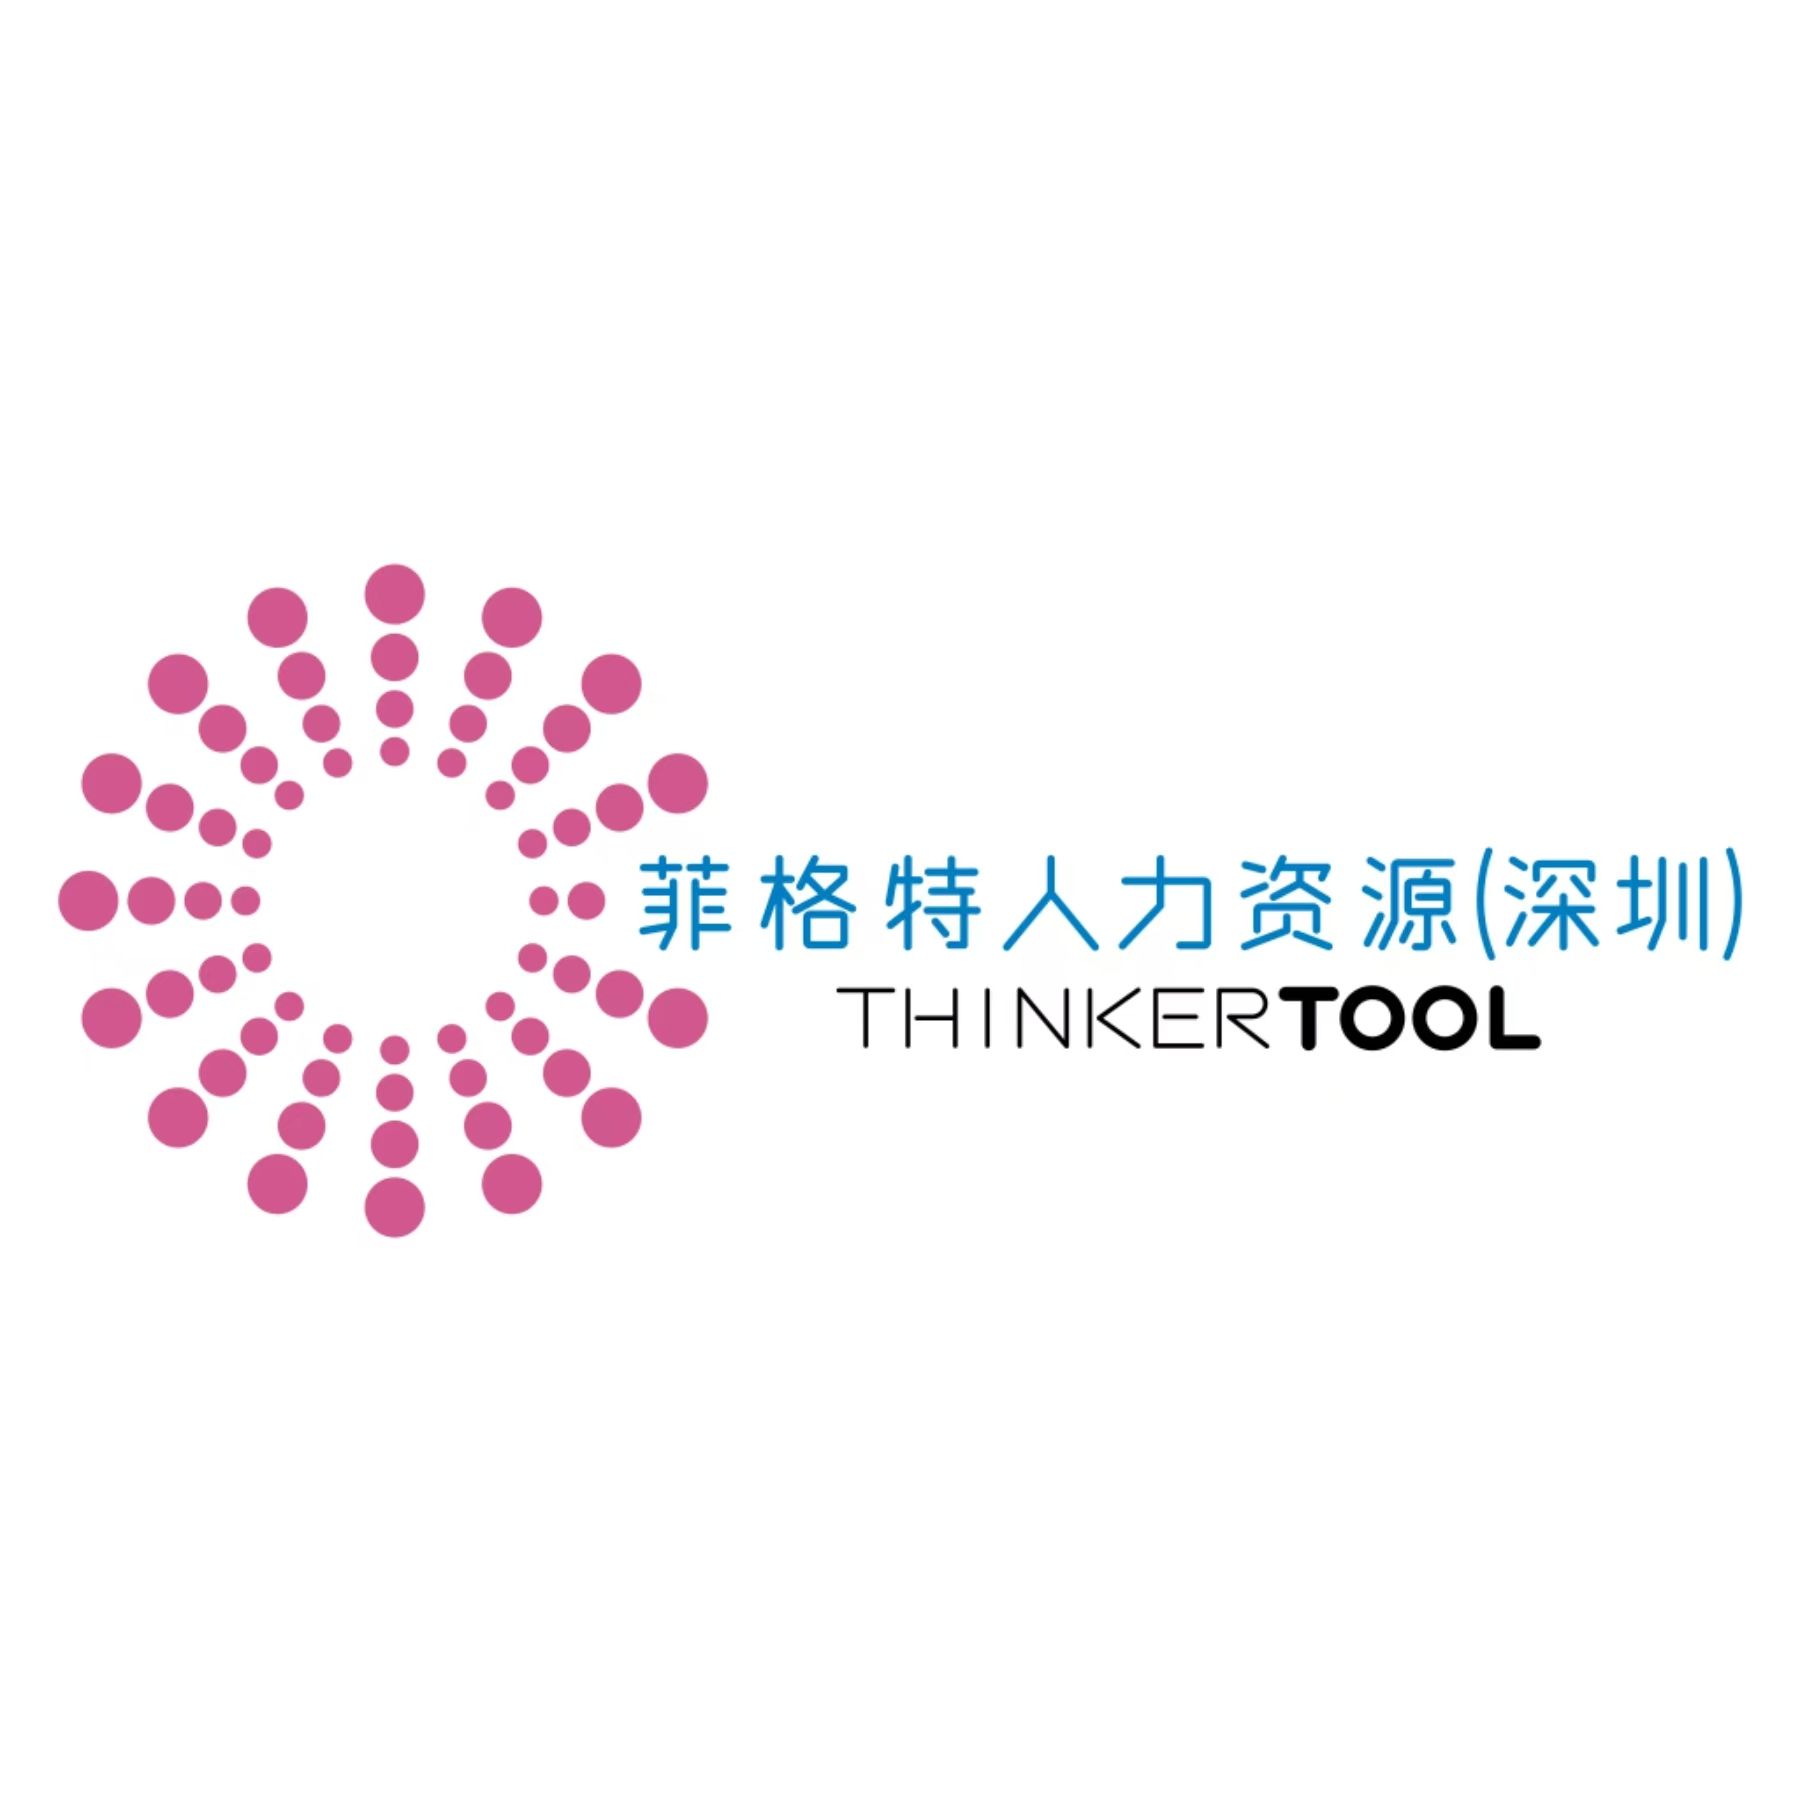 ThinkerTool logo